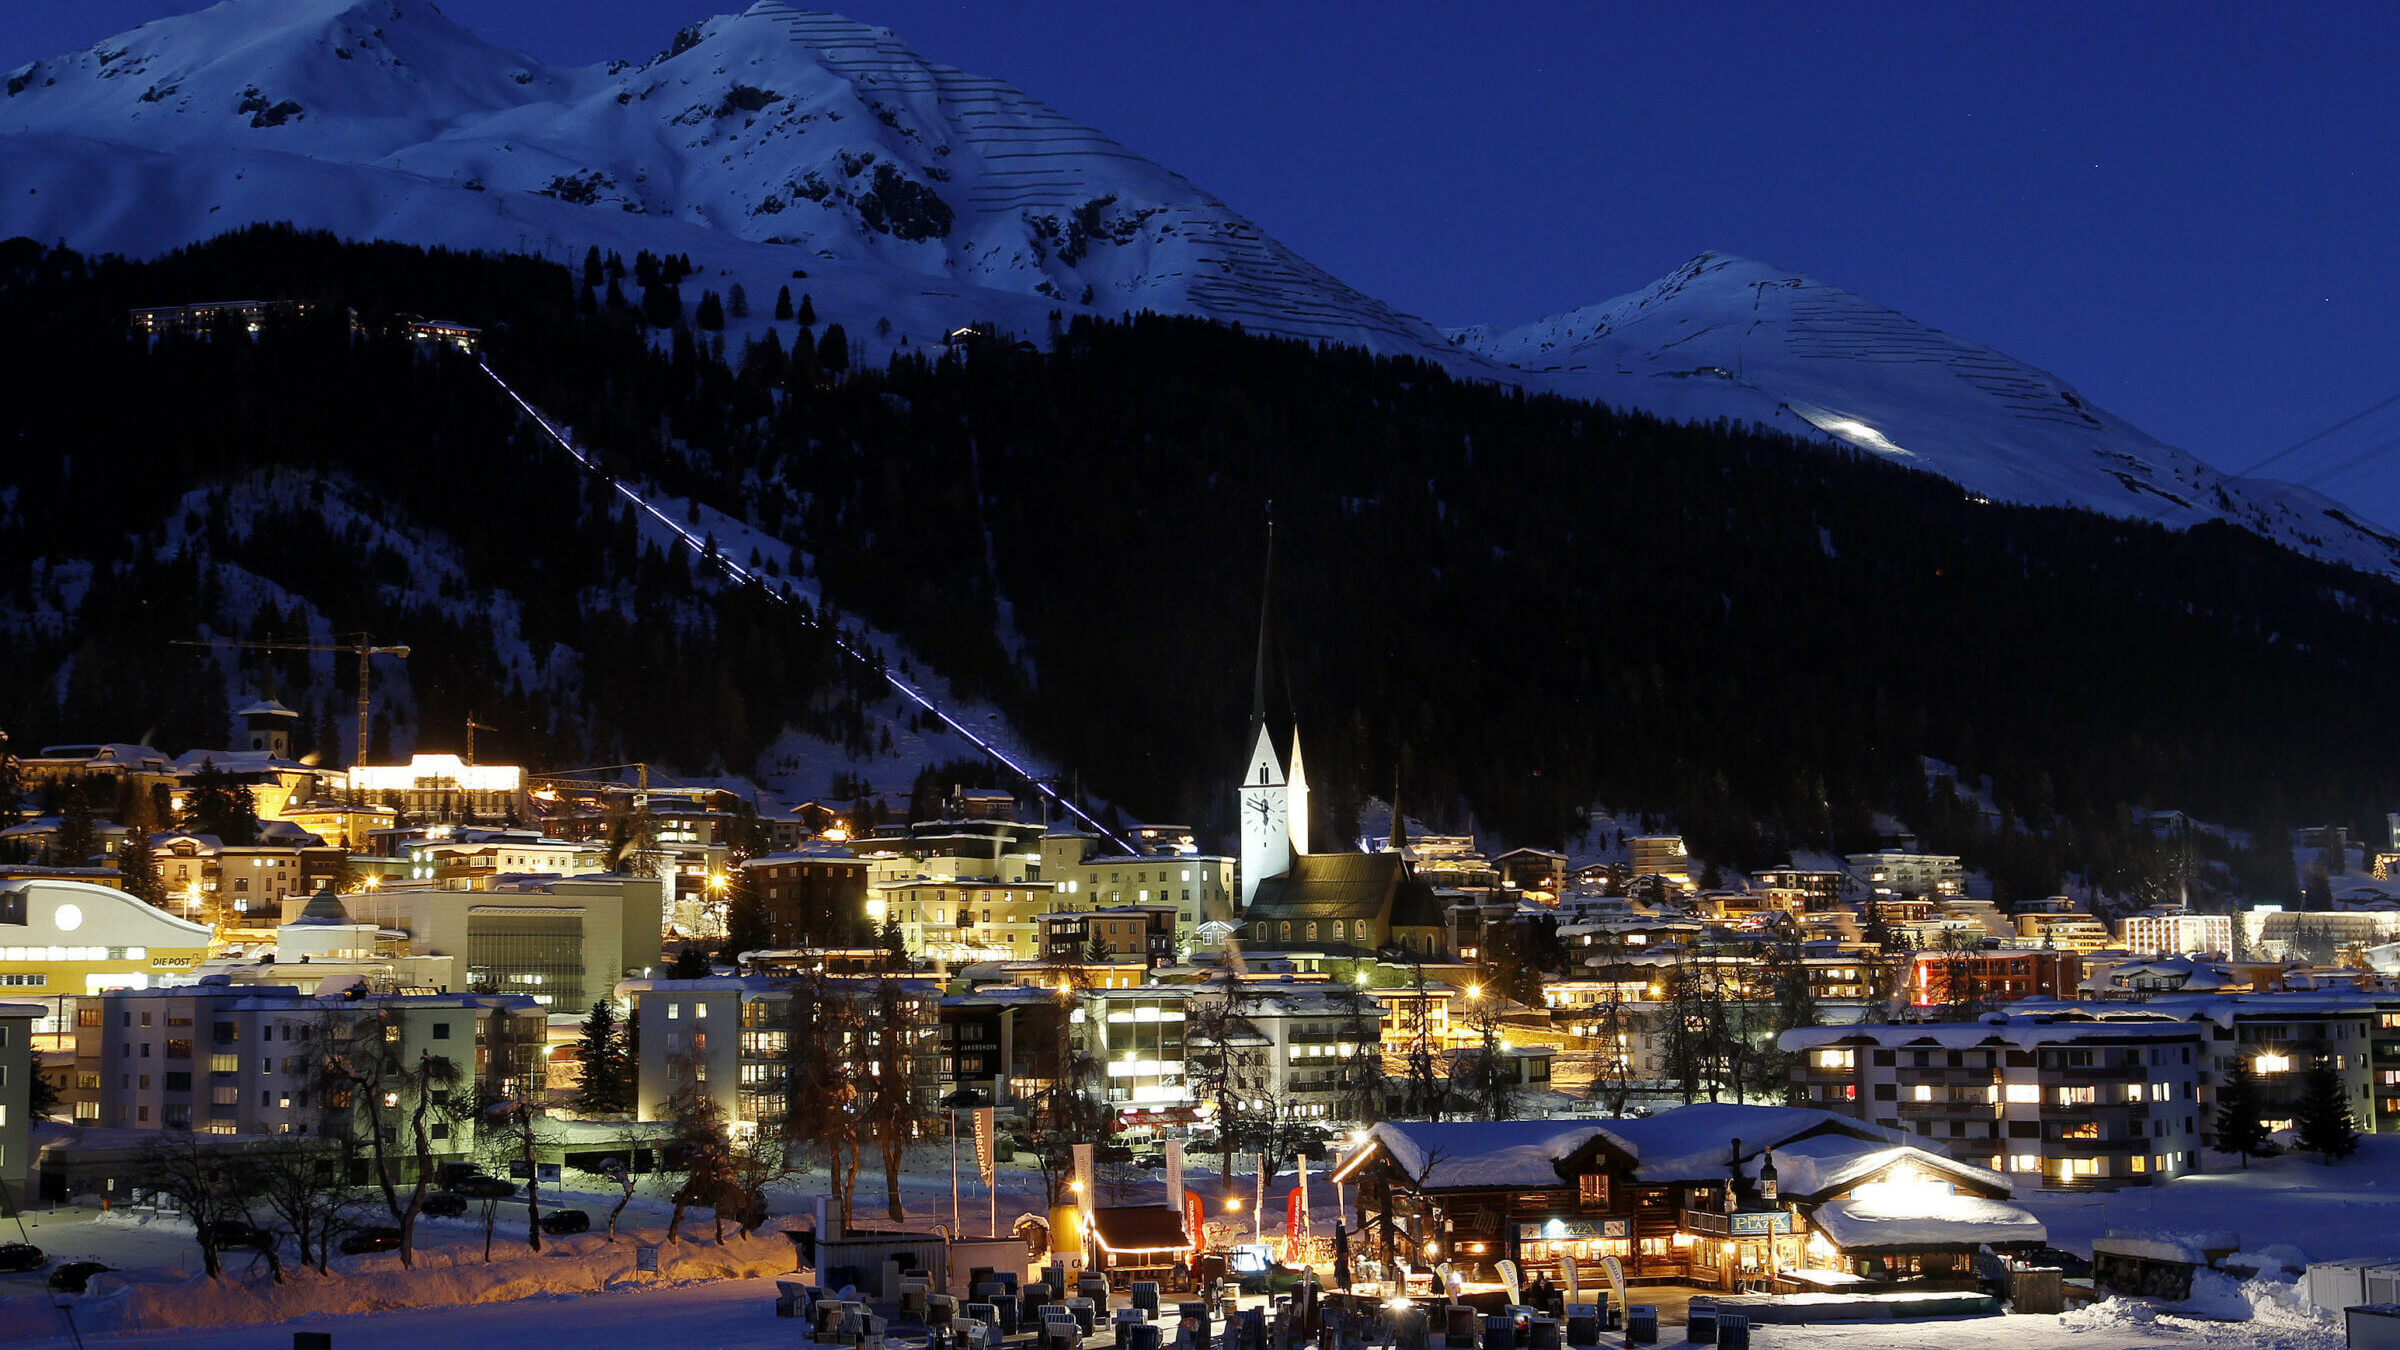 Davos, Switzerland at night